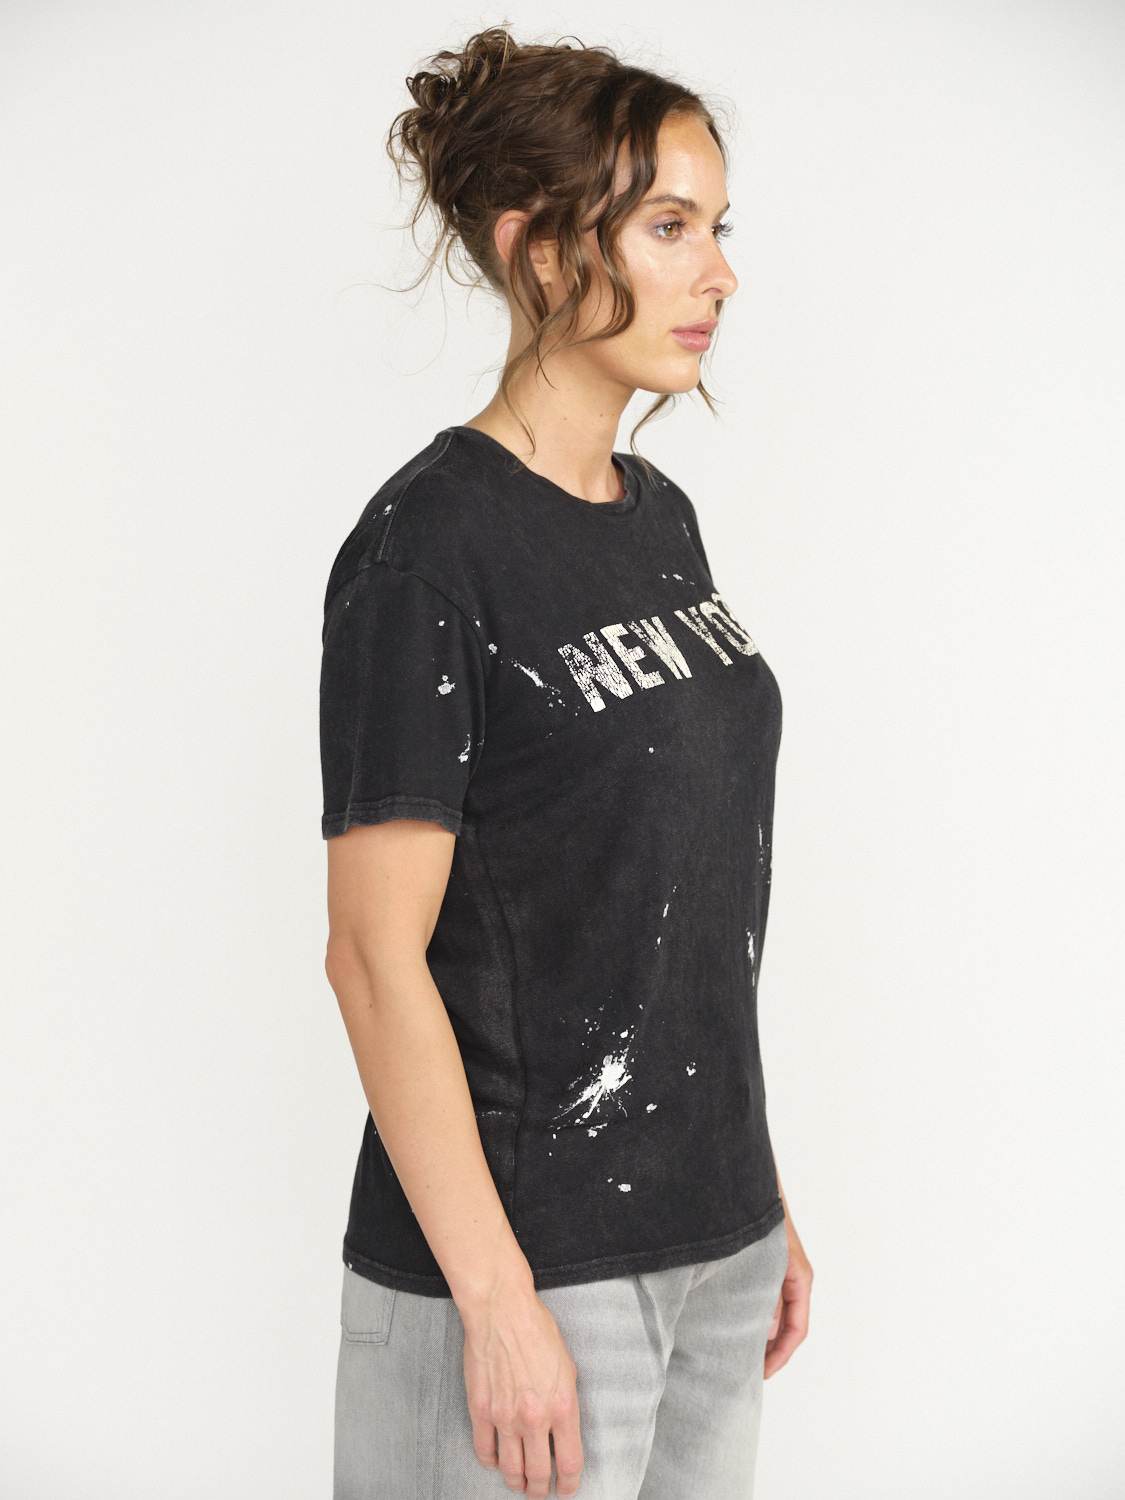 R13 Camiseta New York Niño - Camiseta Splatter de algodón negro M